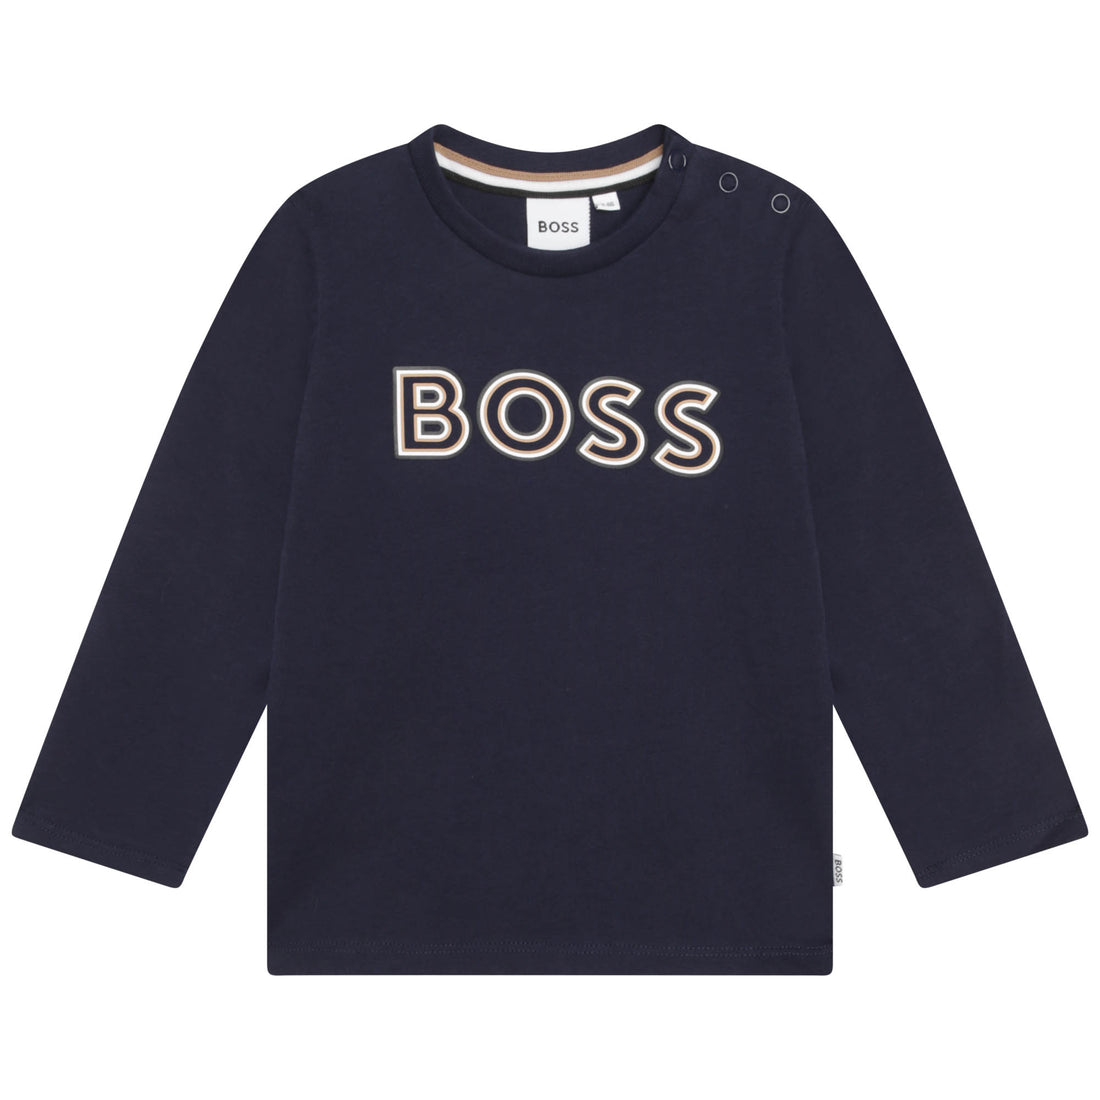 Boss Long Sleeve T-Shirt Style: J05947